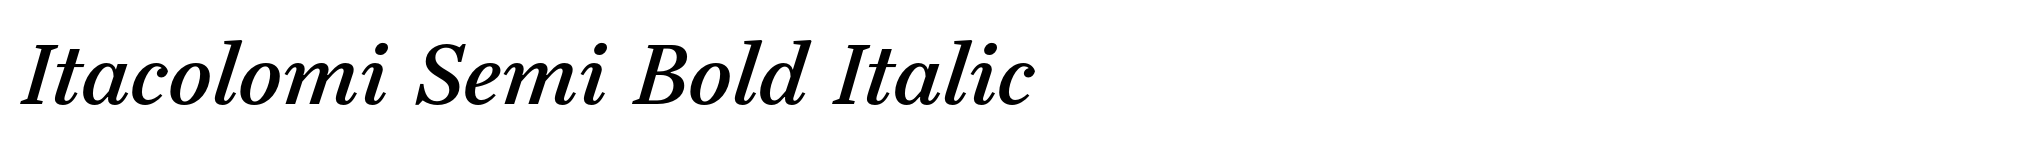 Itacolomi Semi Bold Italic image